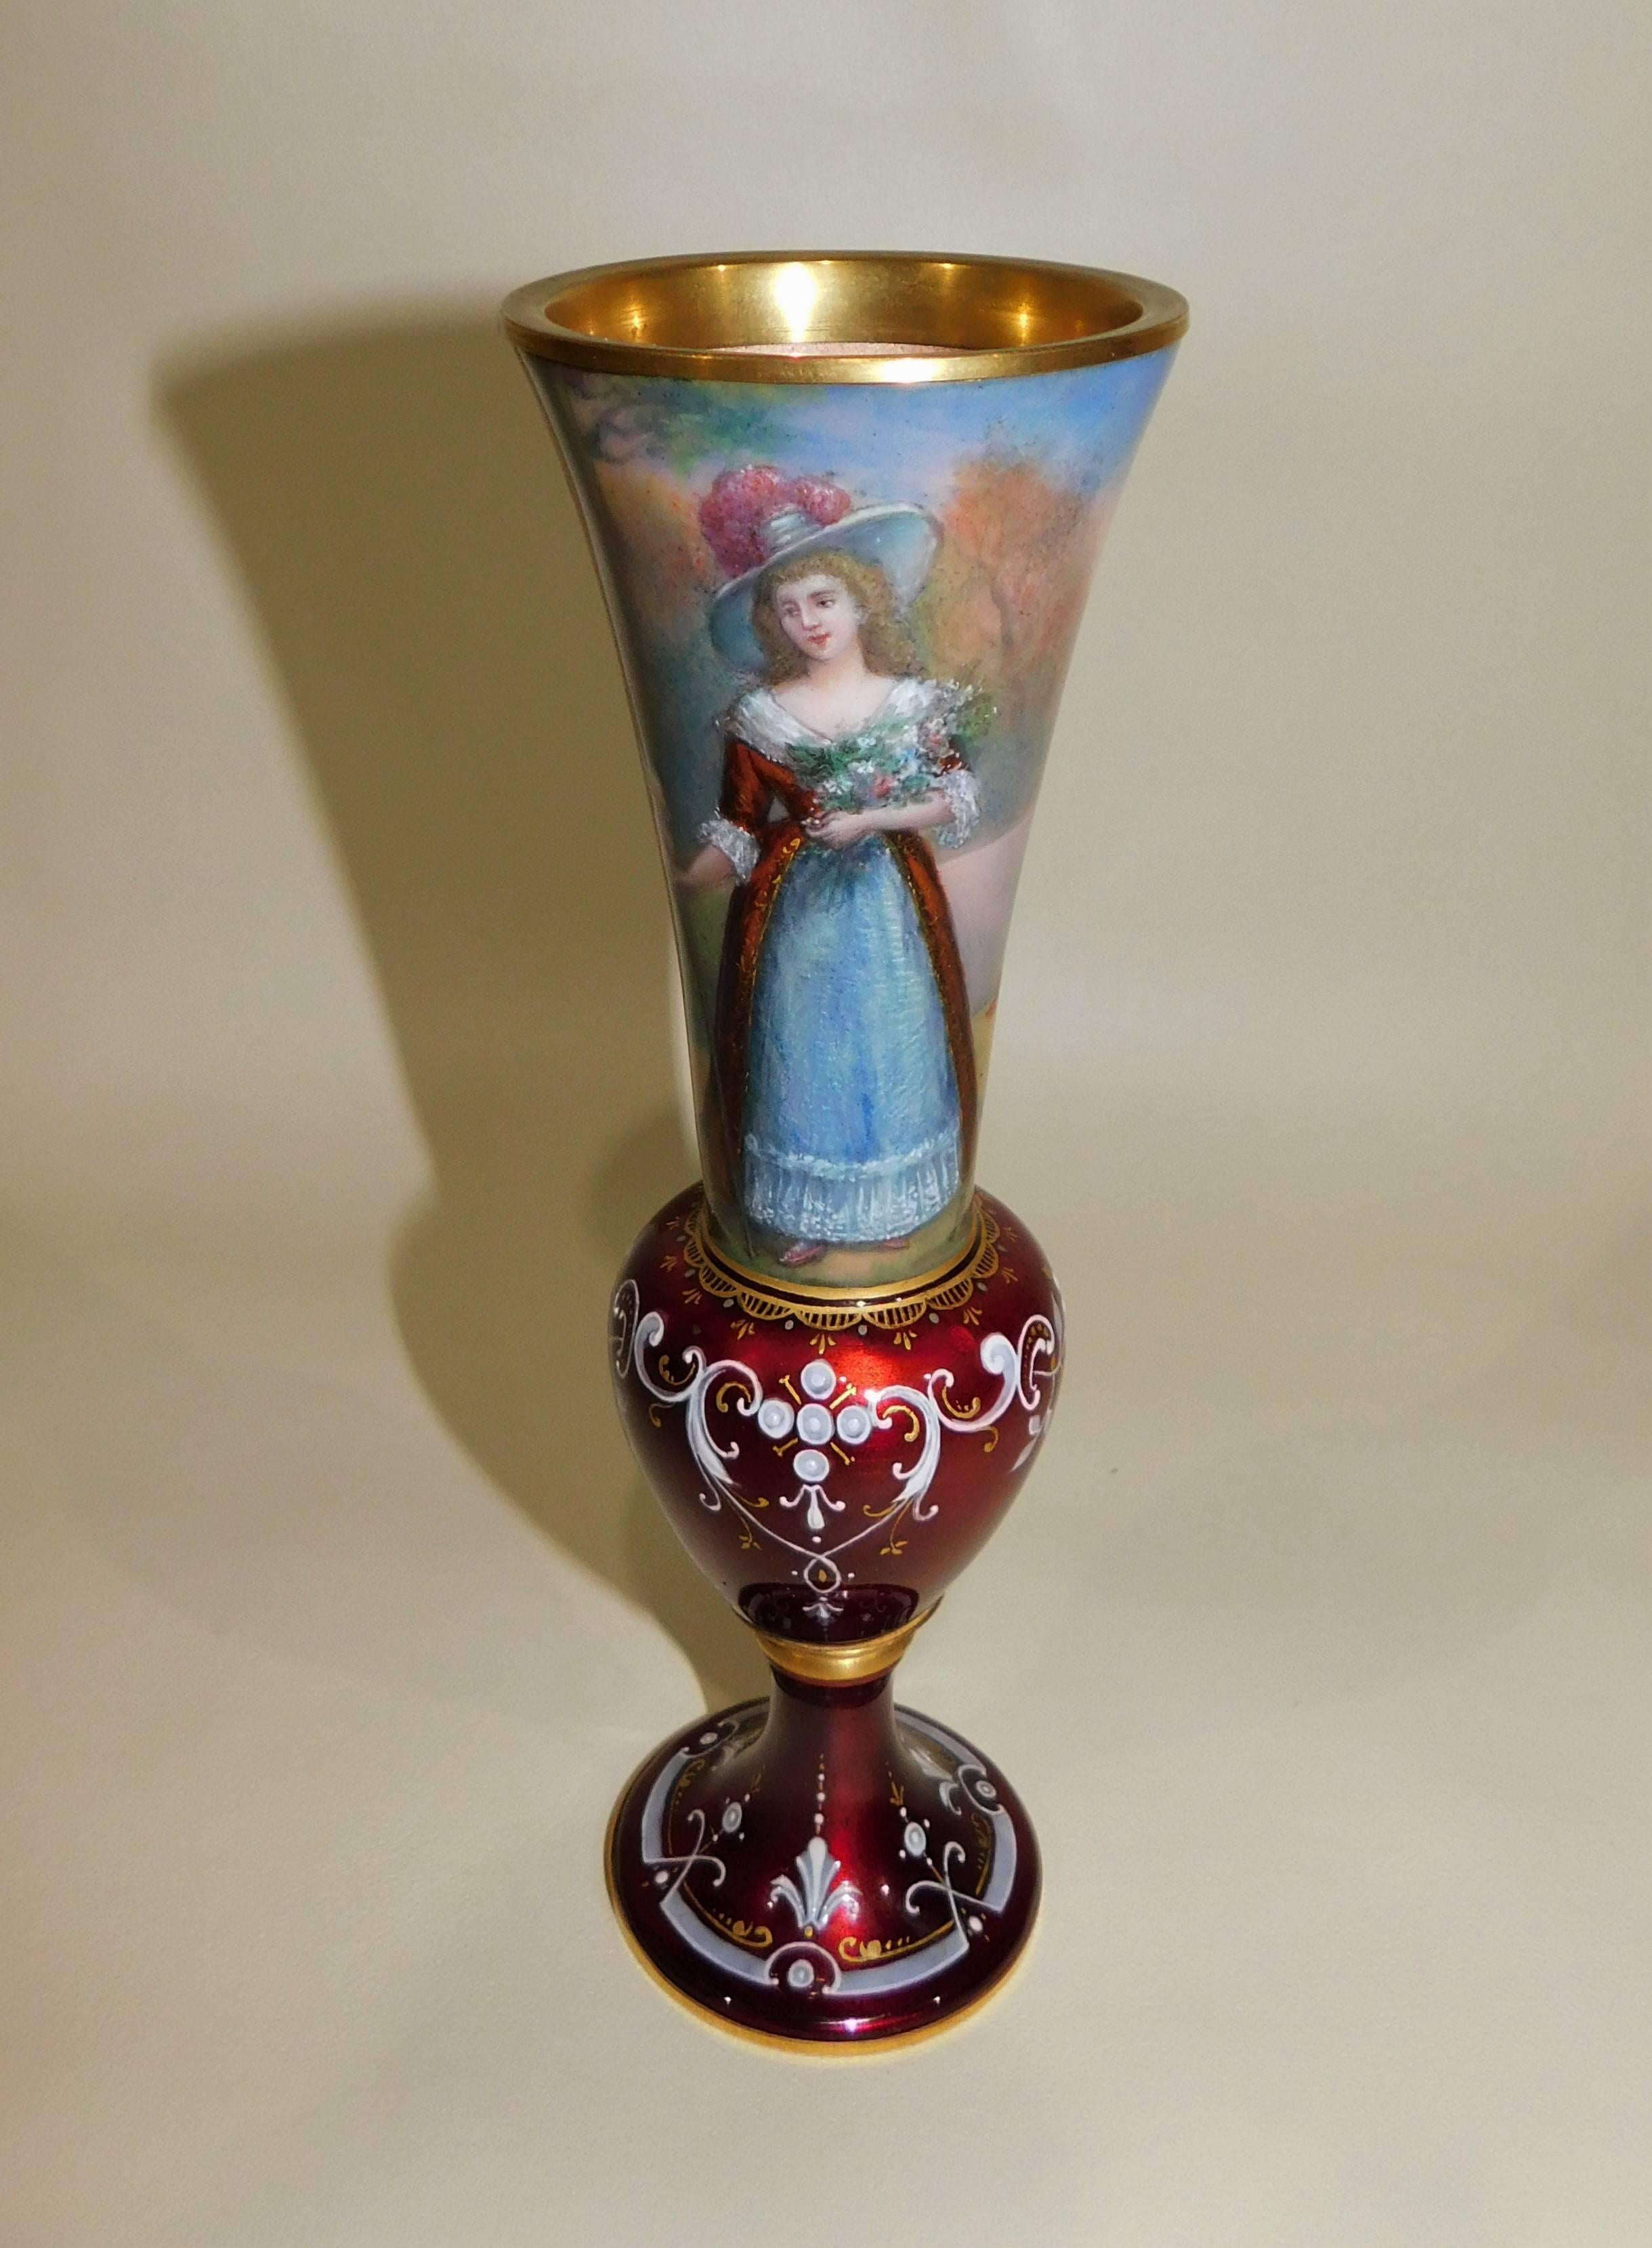 Beautiful antique made in France, enamel on copper portrait vase.